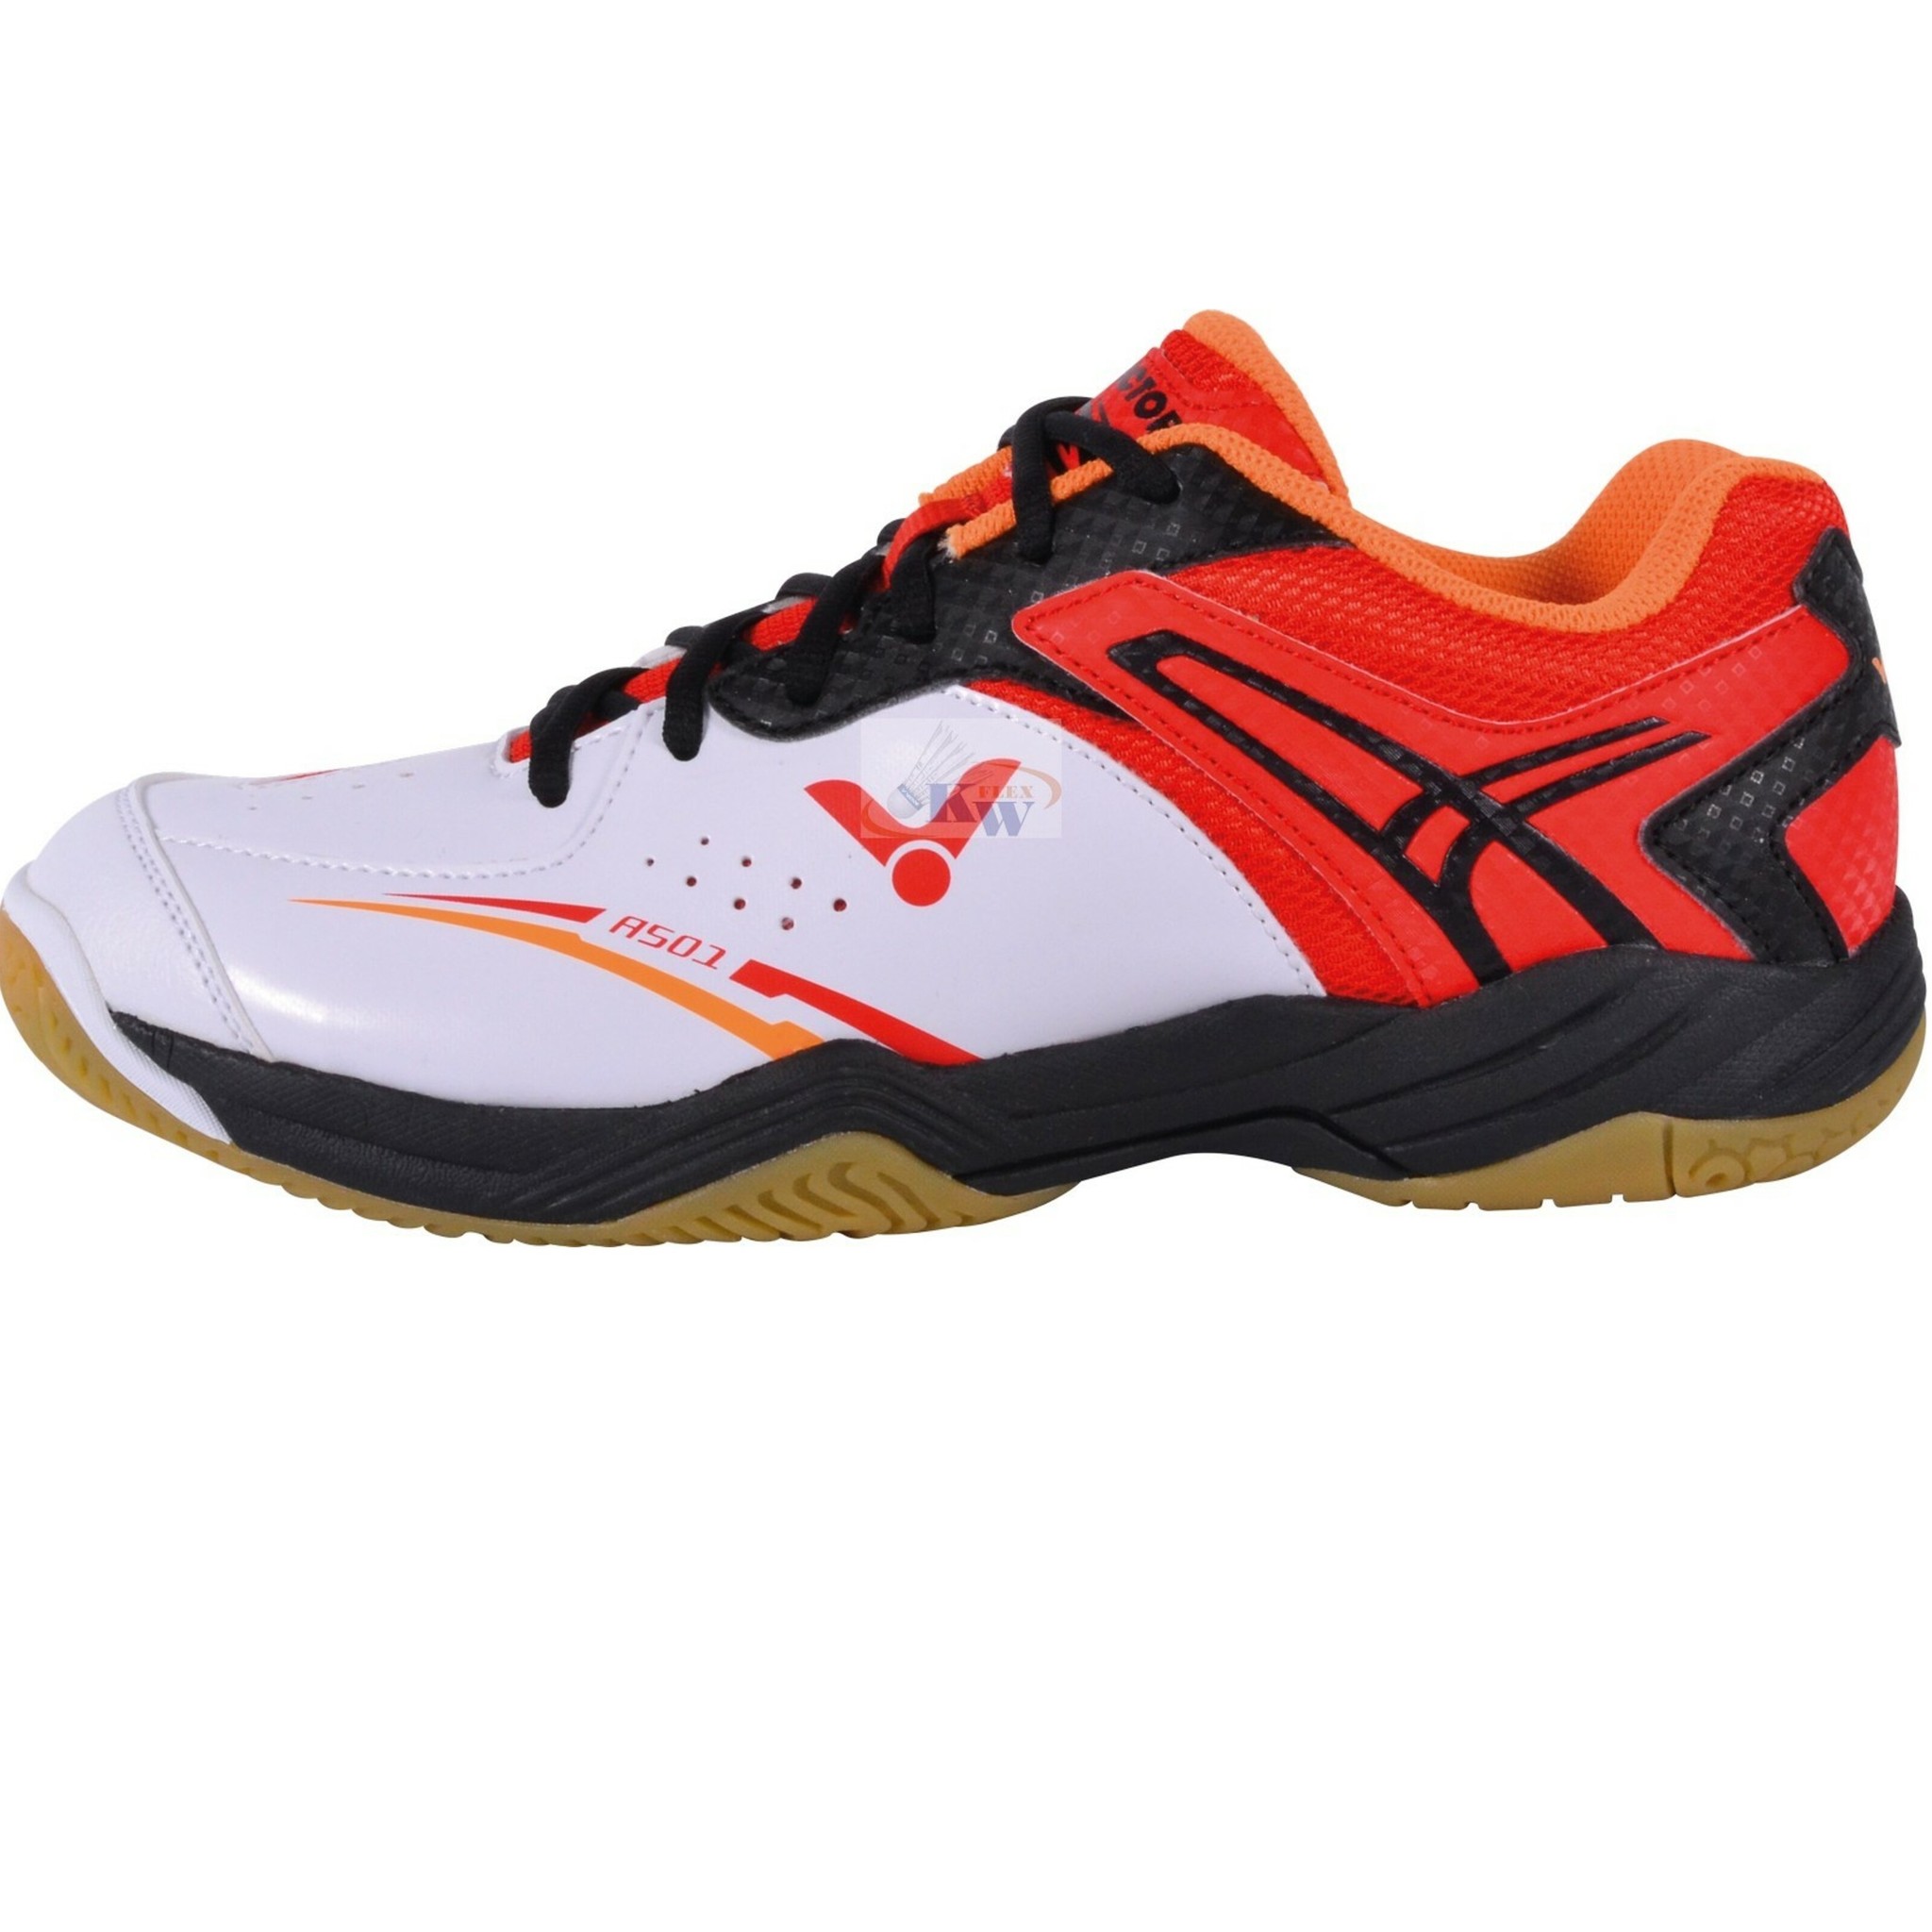 Victor A501 White/Red badminton/squash shoe - KW FLEX Badminton